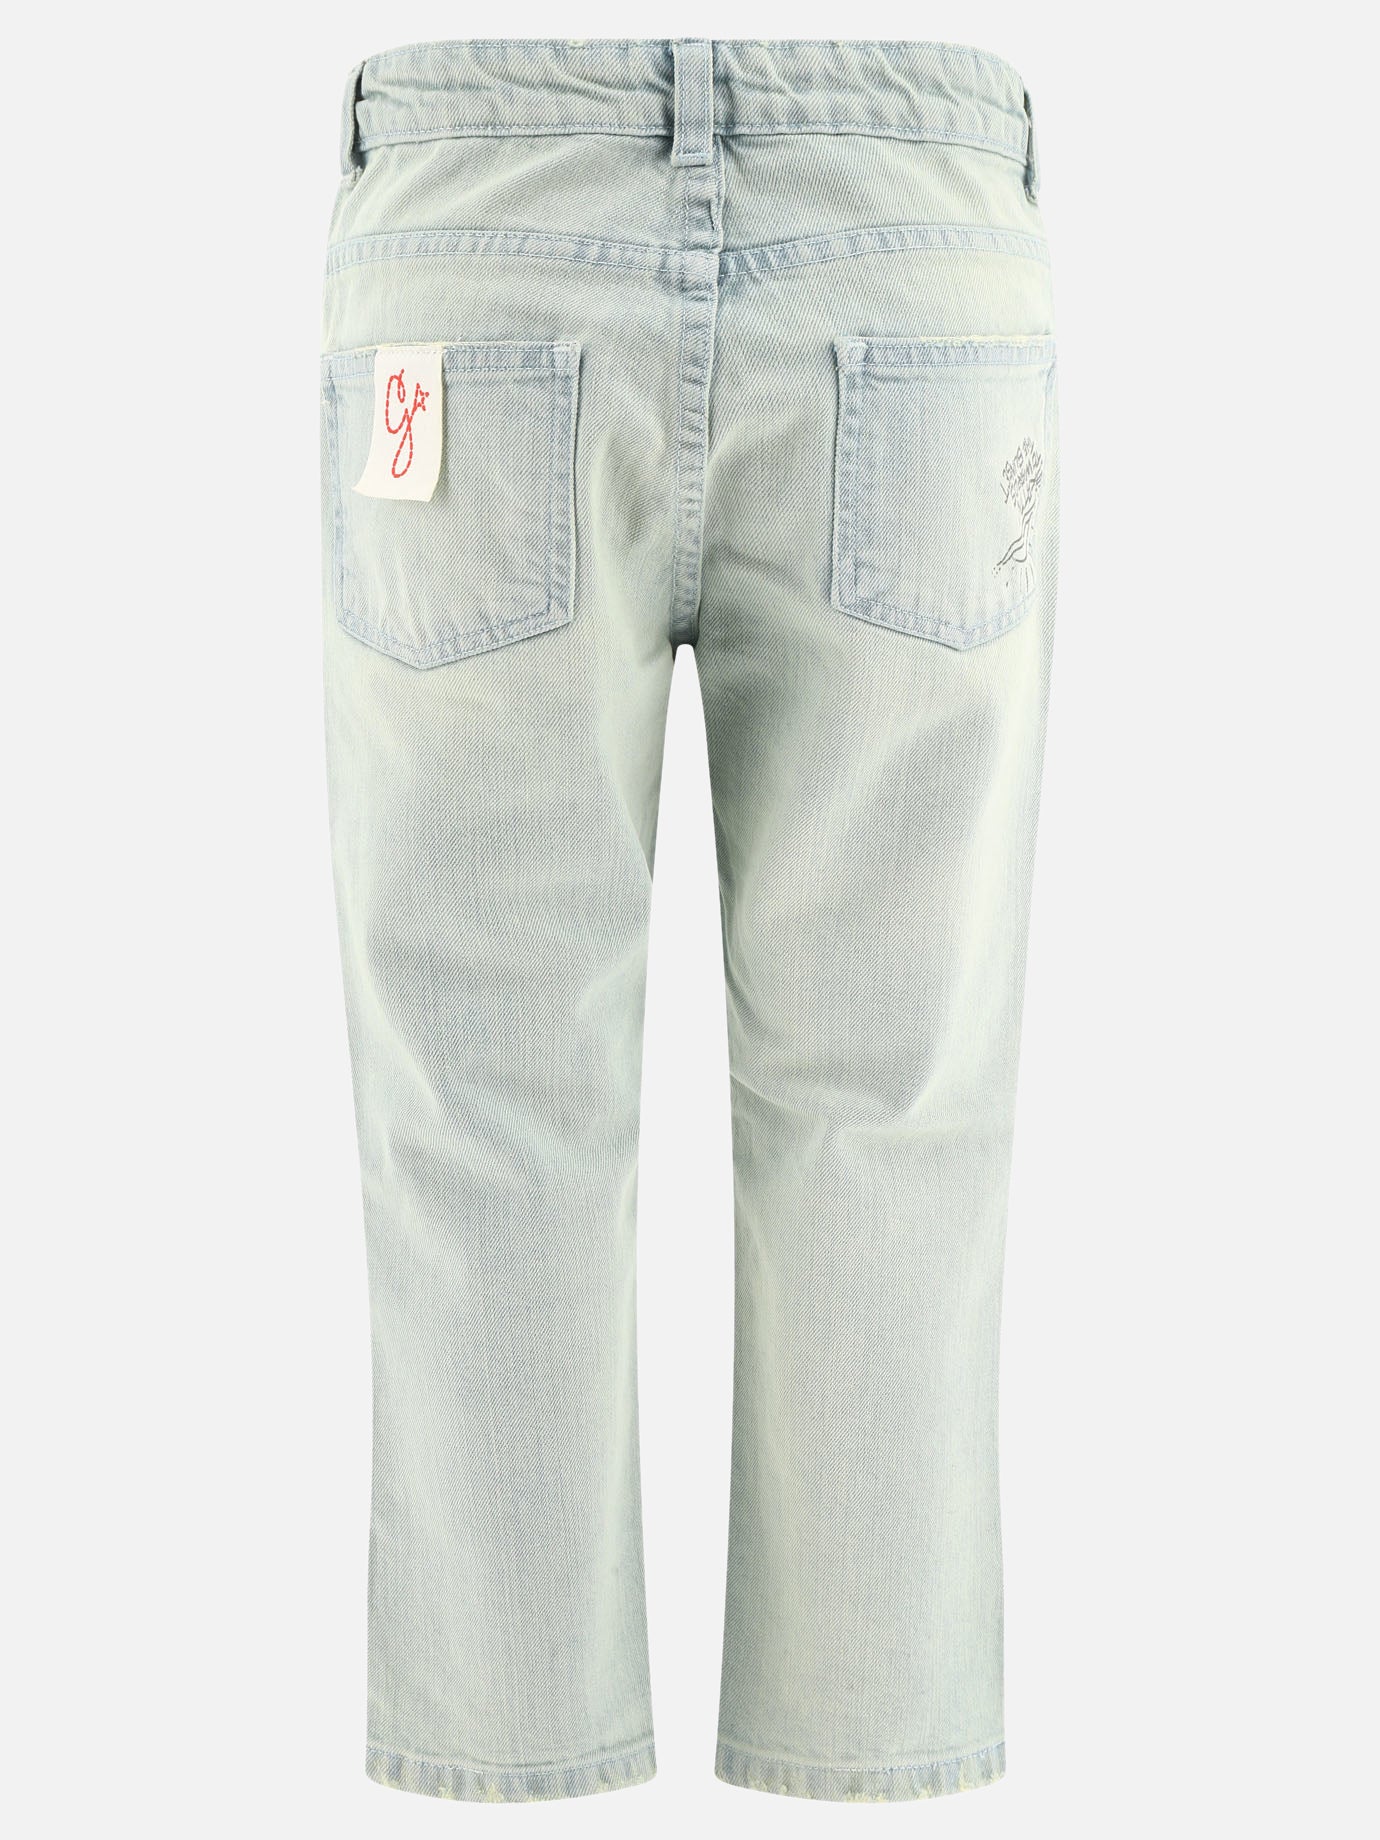 "Yao" jeans